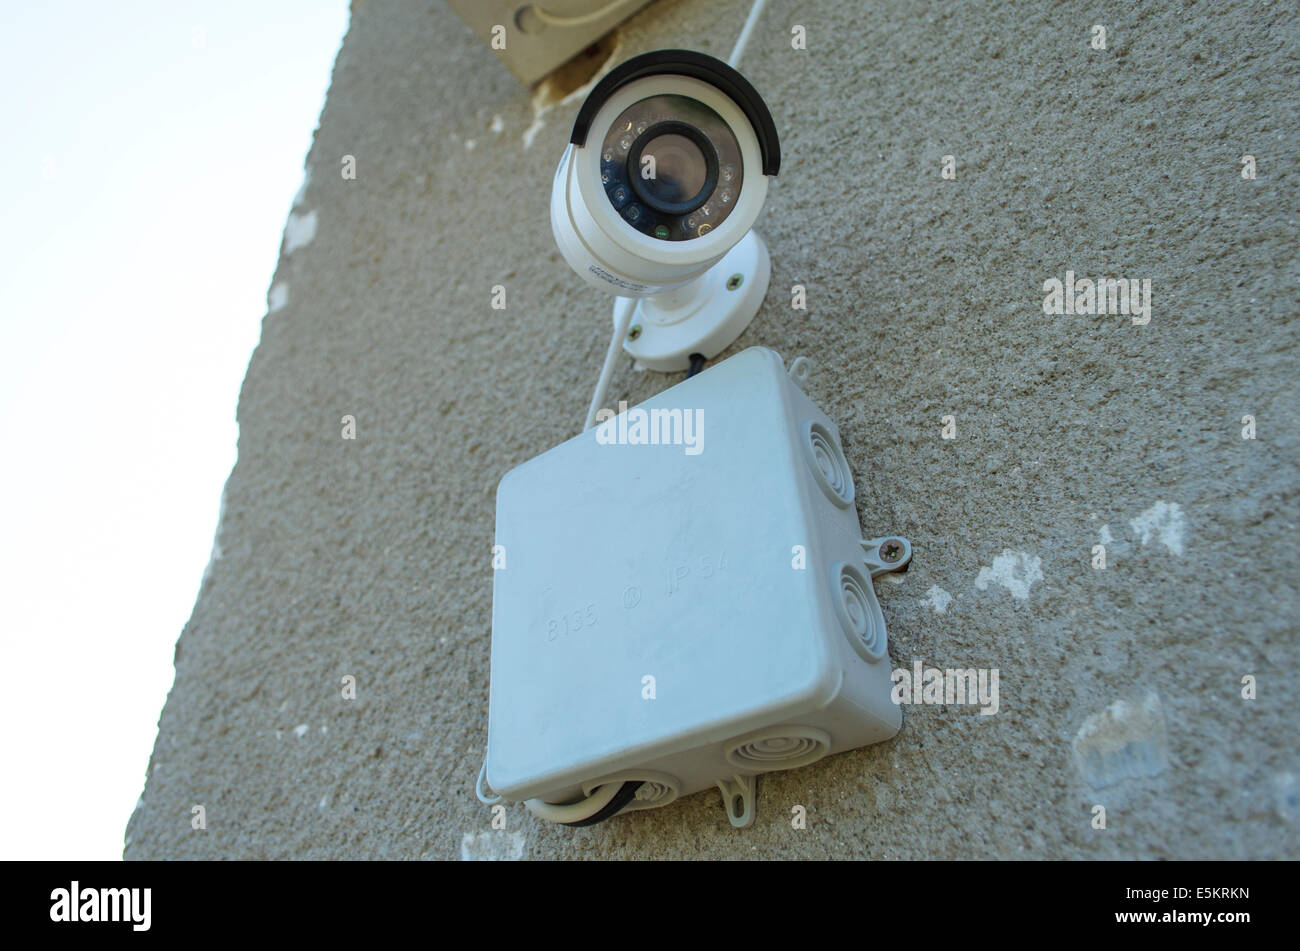 Day & Night Color IP surveillance camera Stock Photo